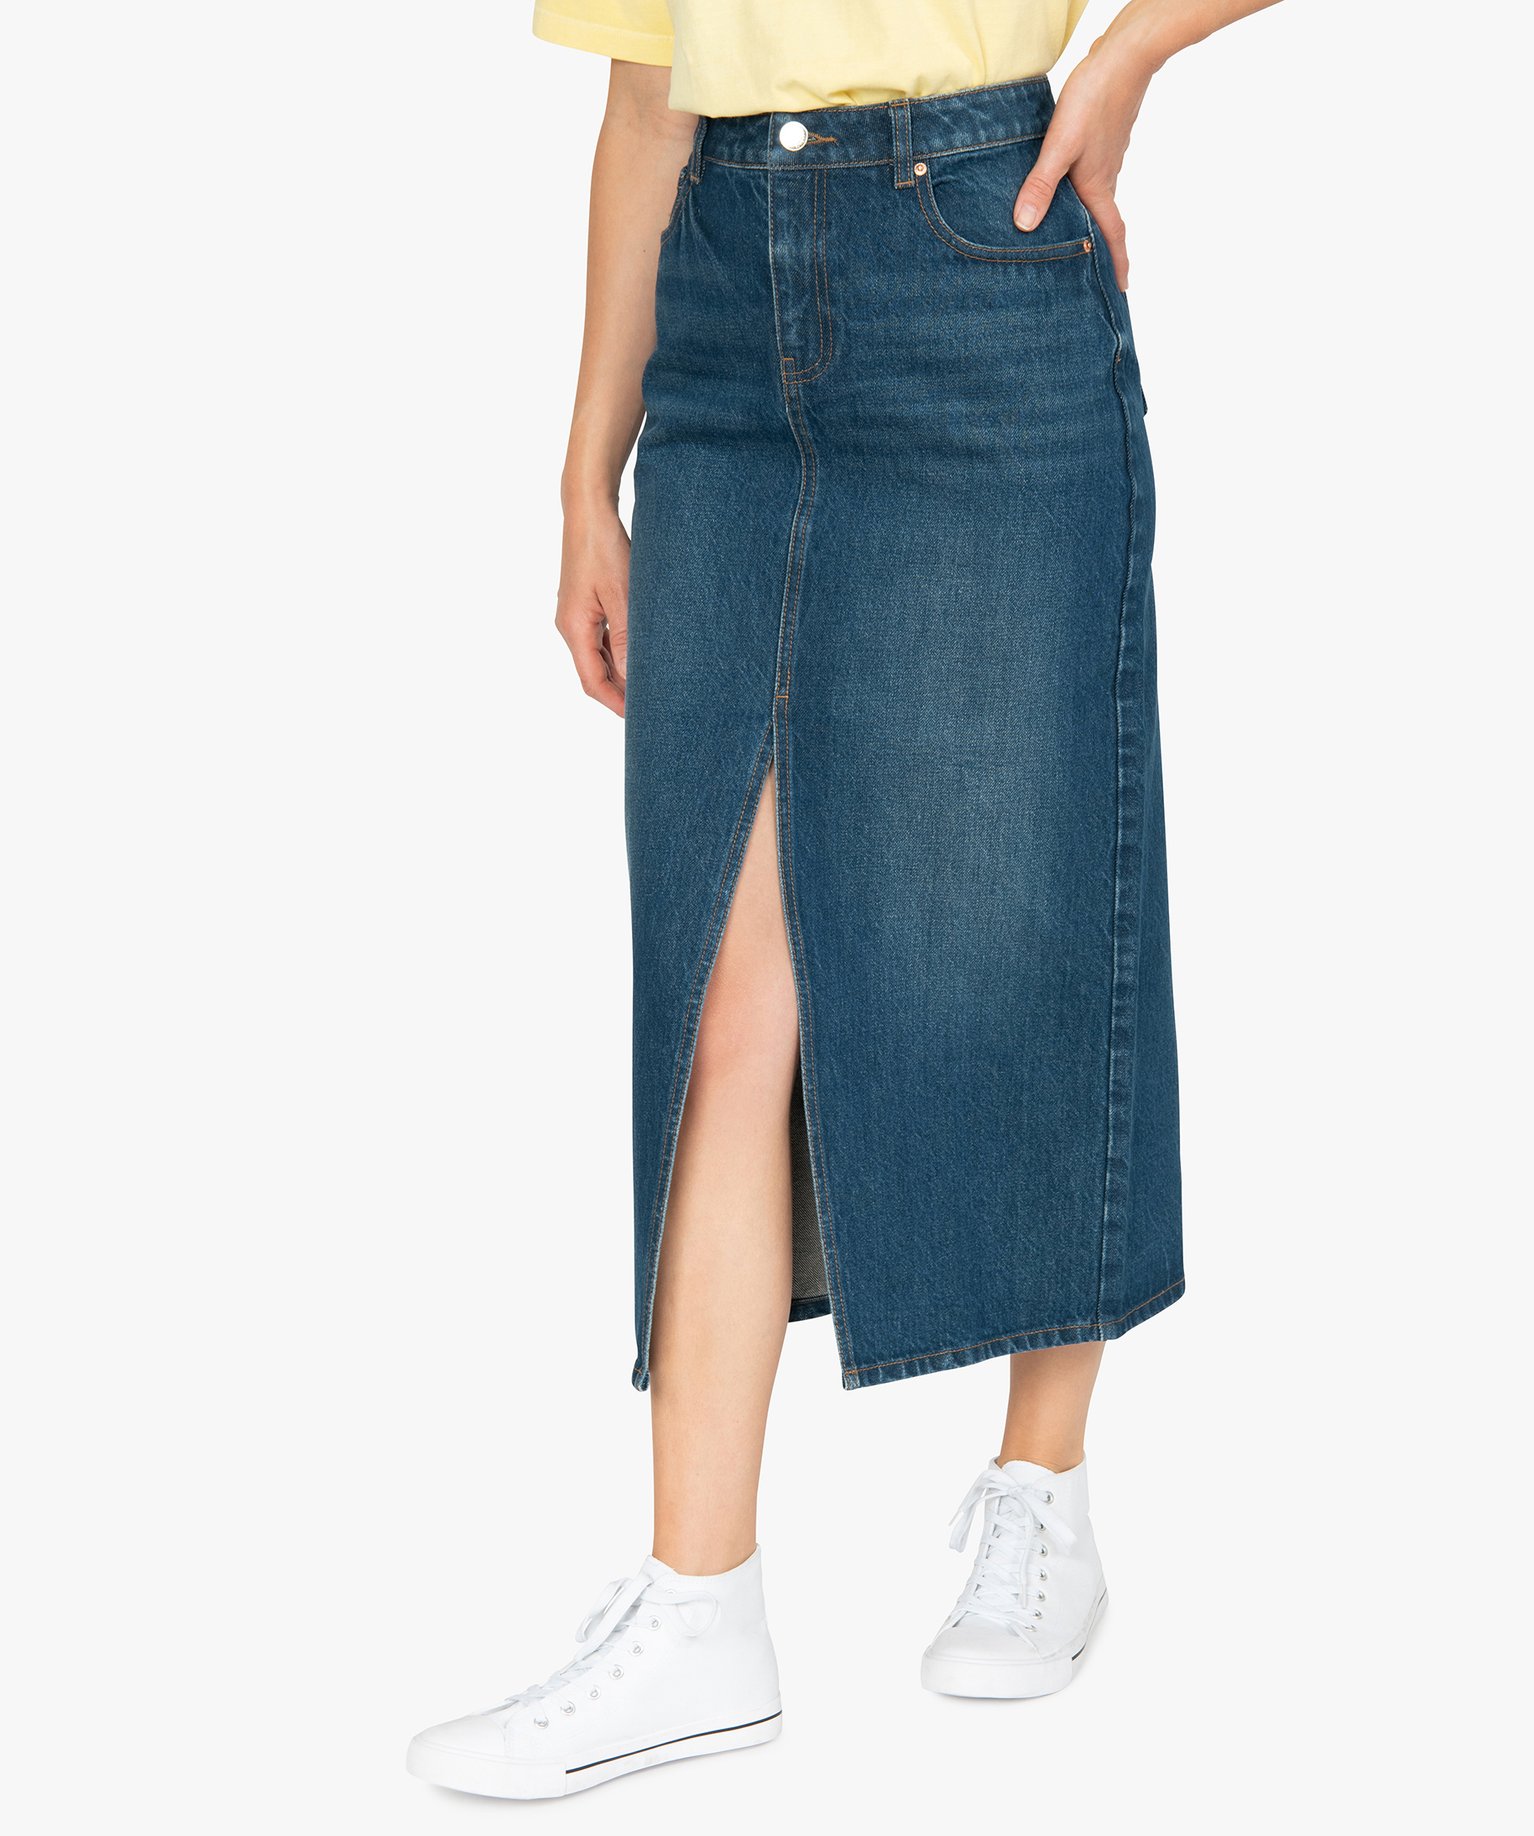 jupe femme longue en jean fendue devant gris jupes en jean